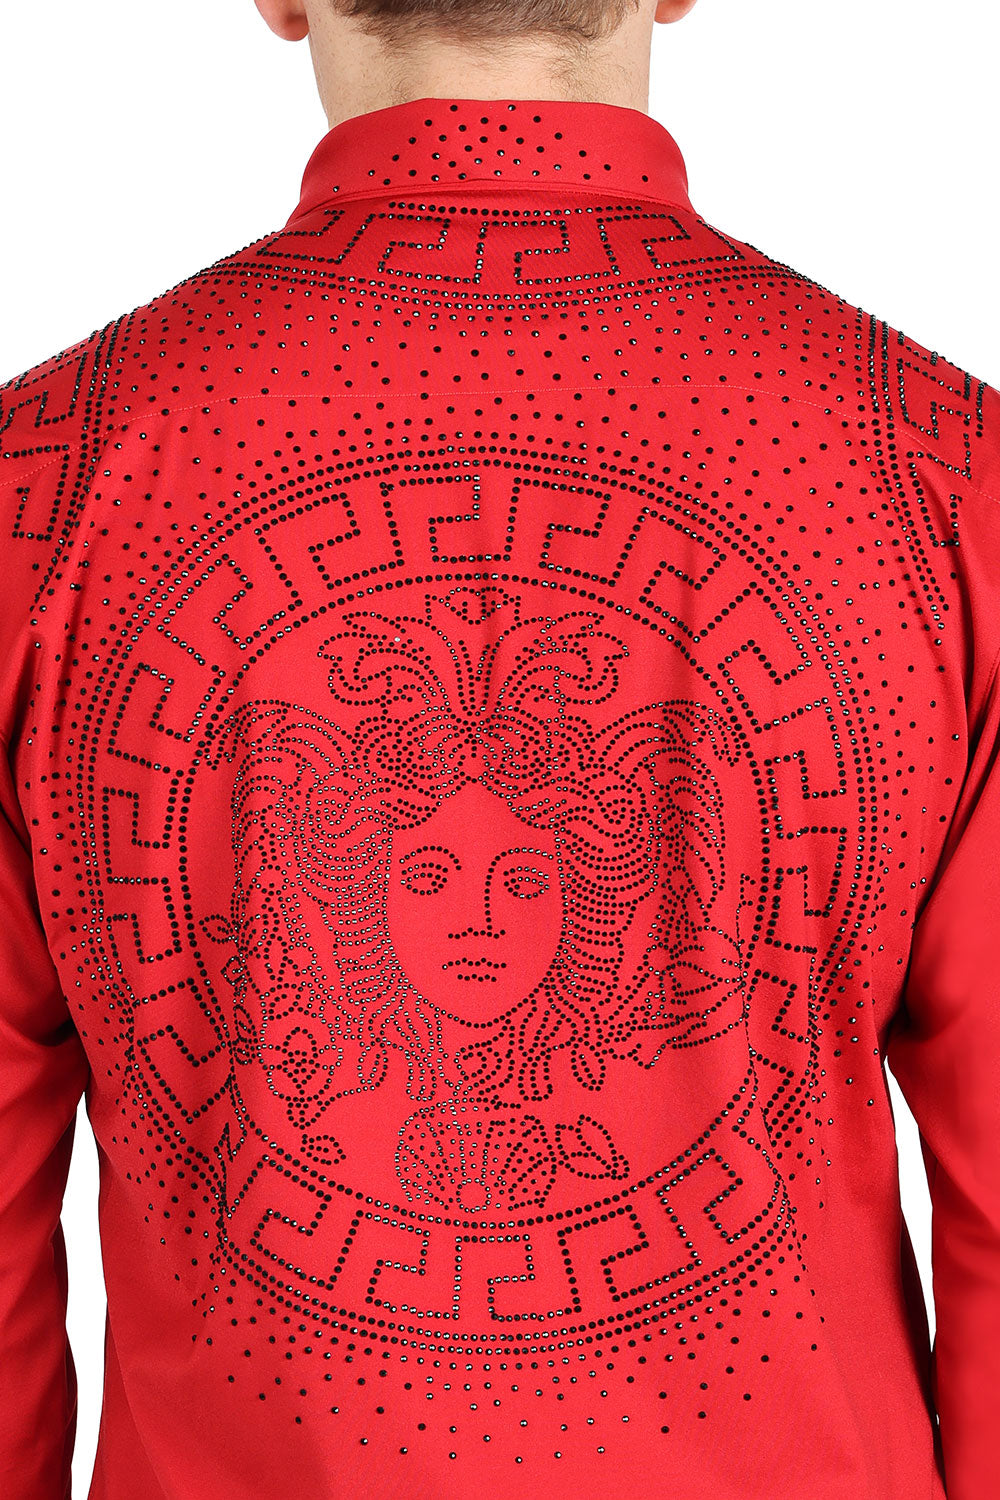 Barabas Men's Rhinestone Greek key Medusa Long Sleeves Shirts 2BR101 Red Black